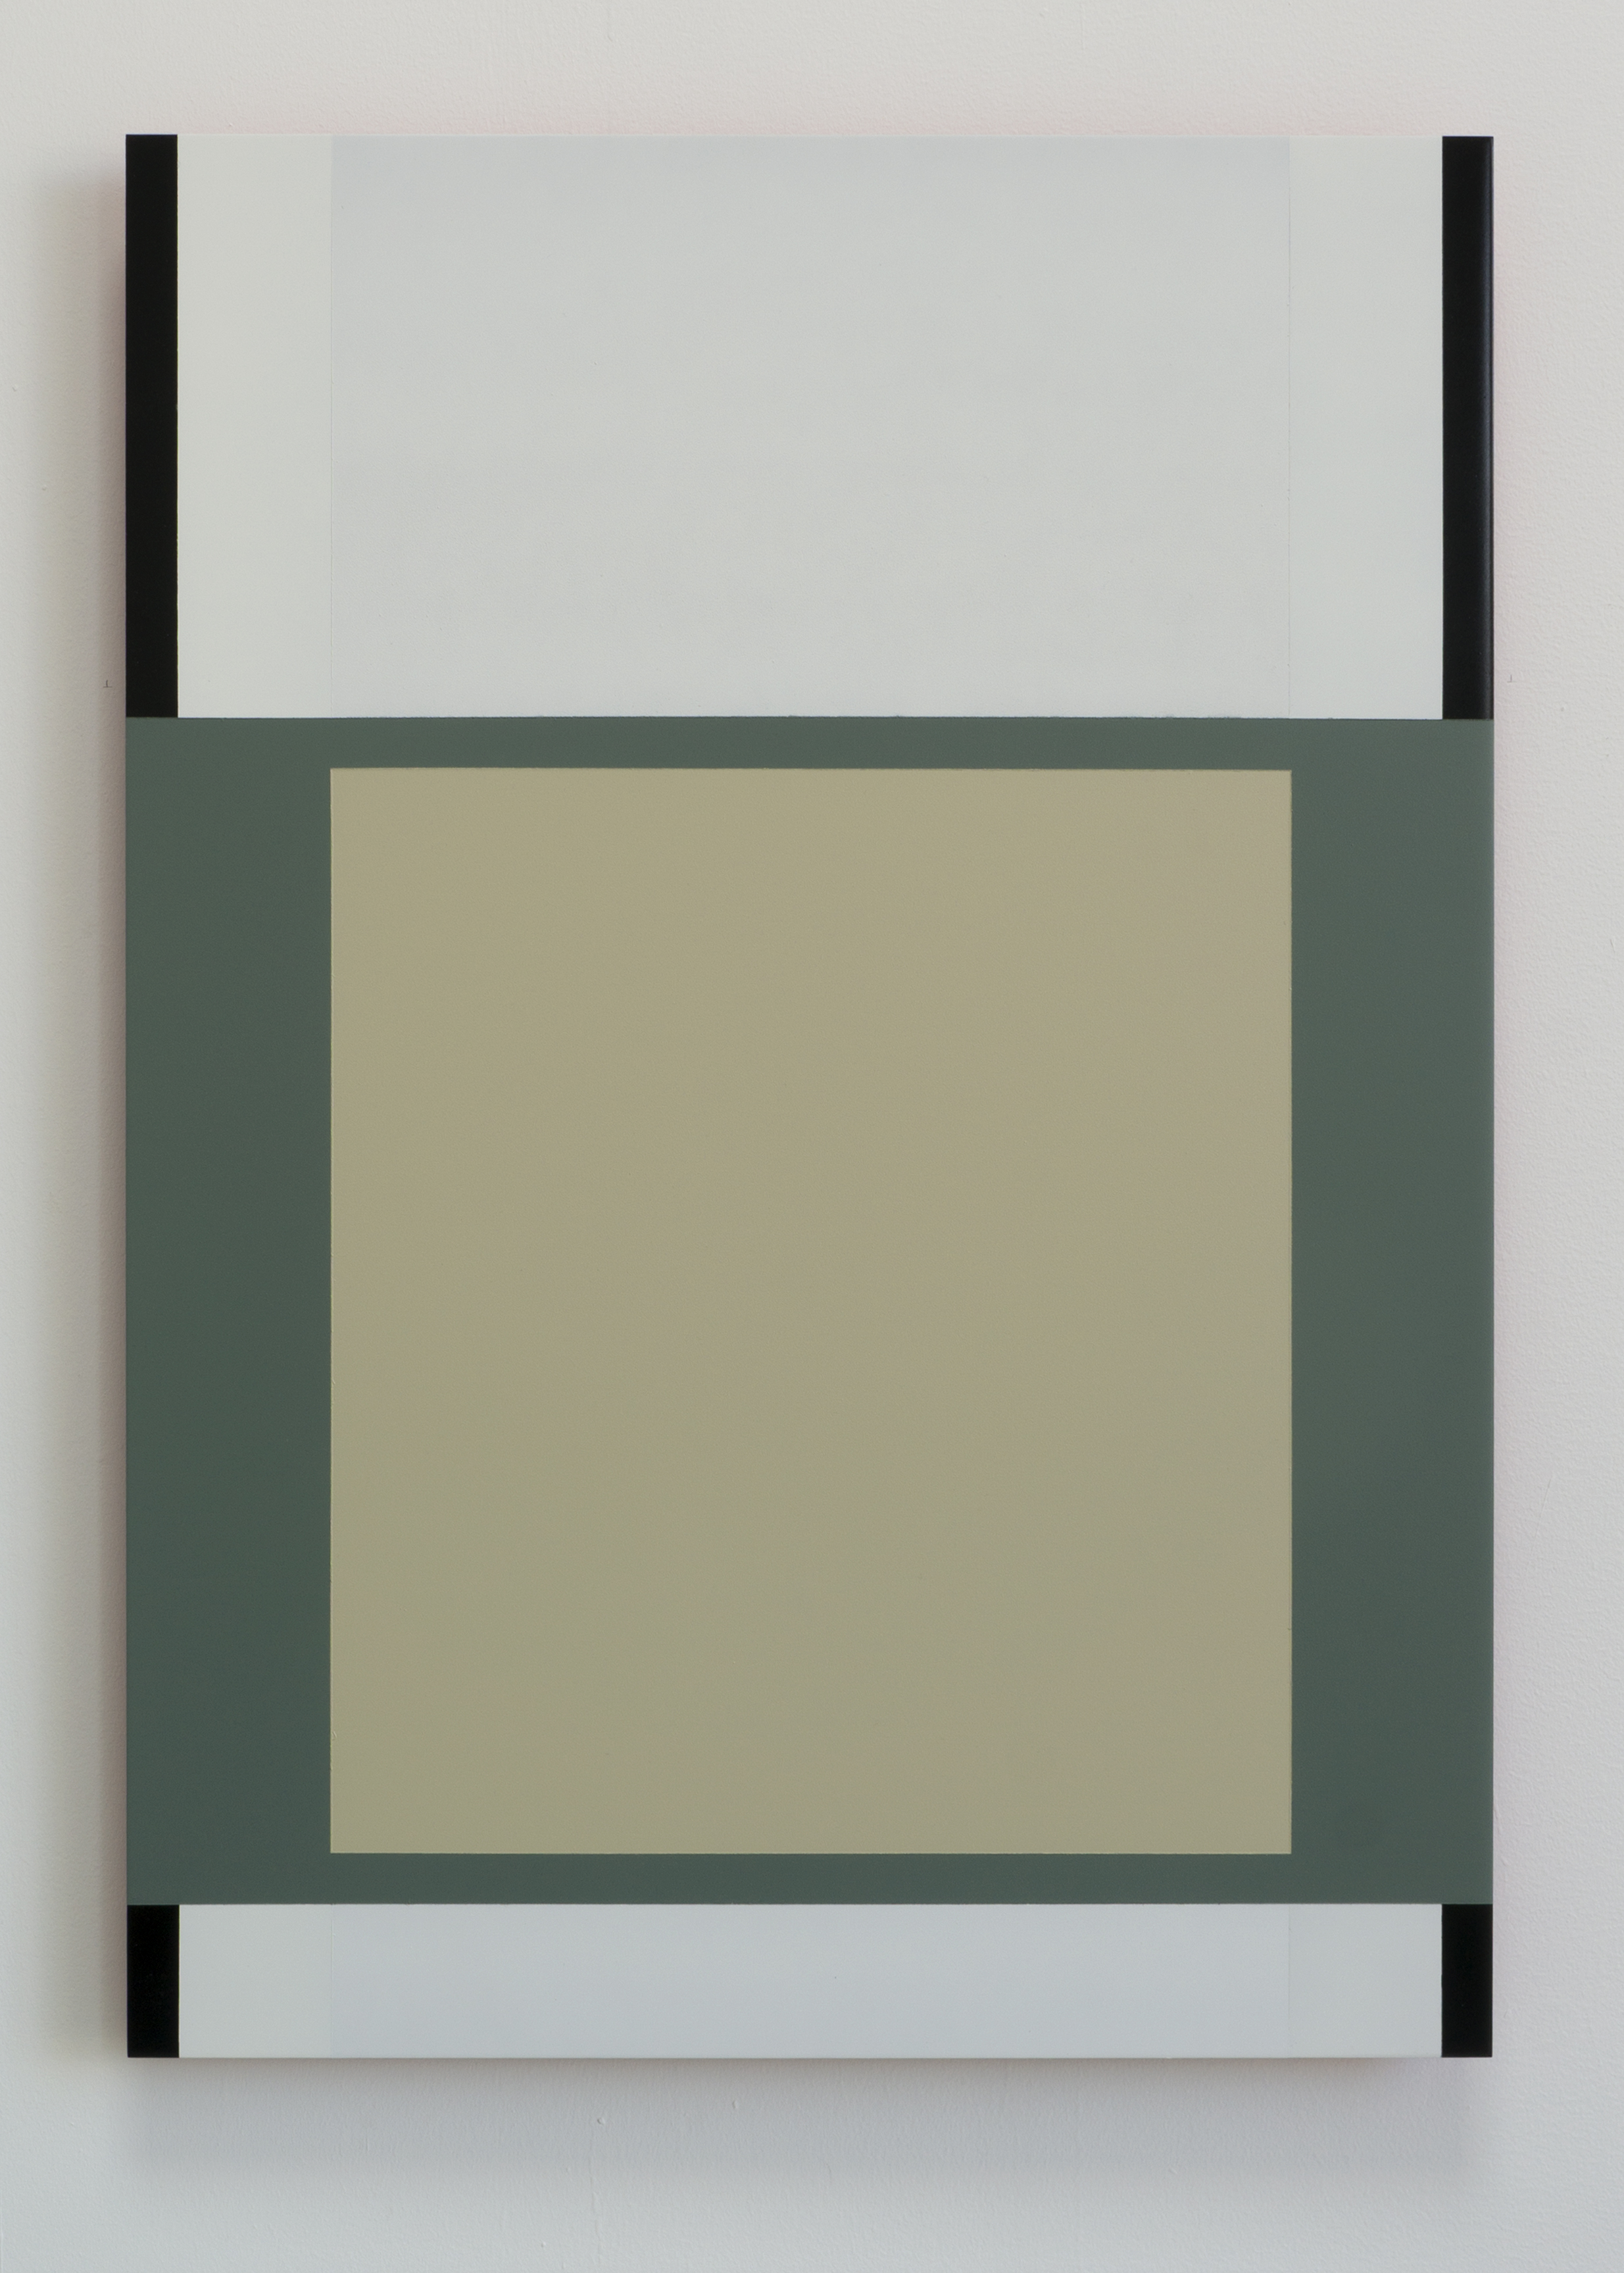  "Green Square"  2014  28" x 20",  spray paint on aluminum 